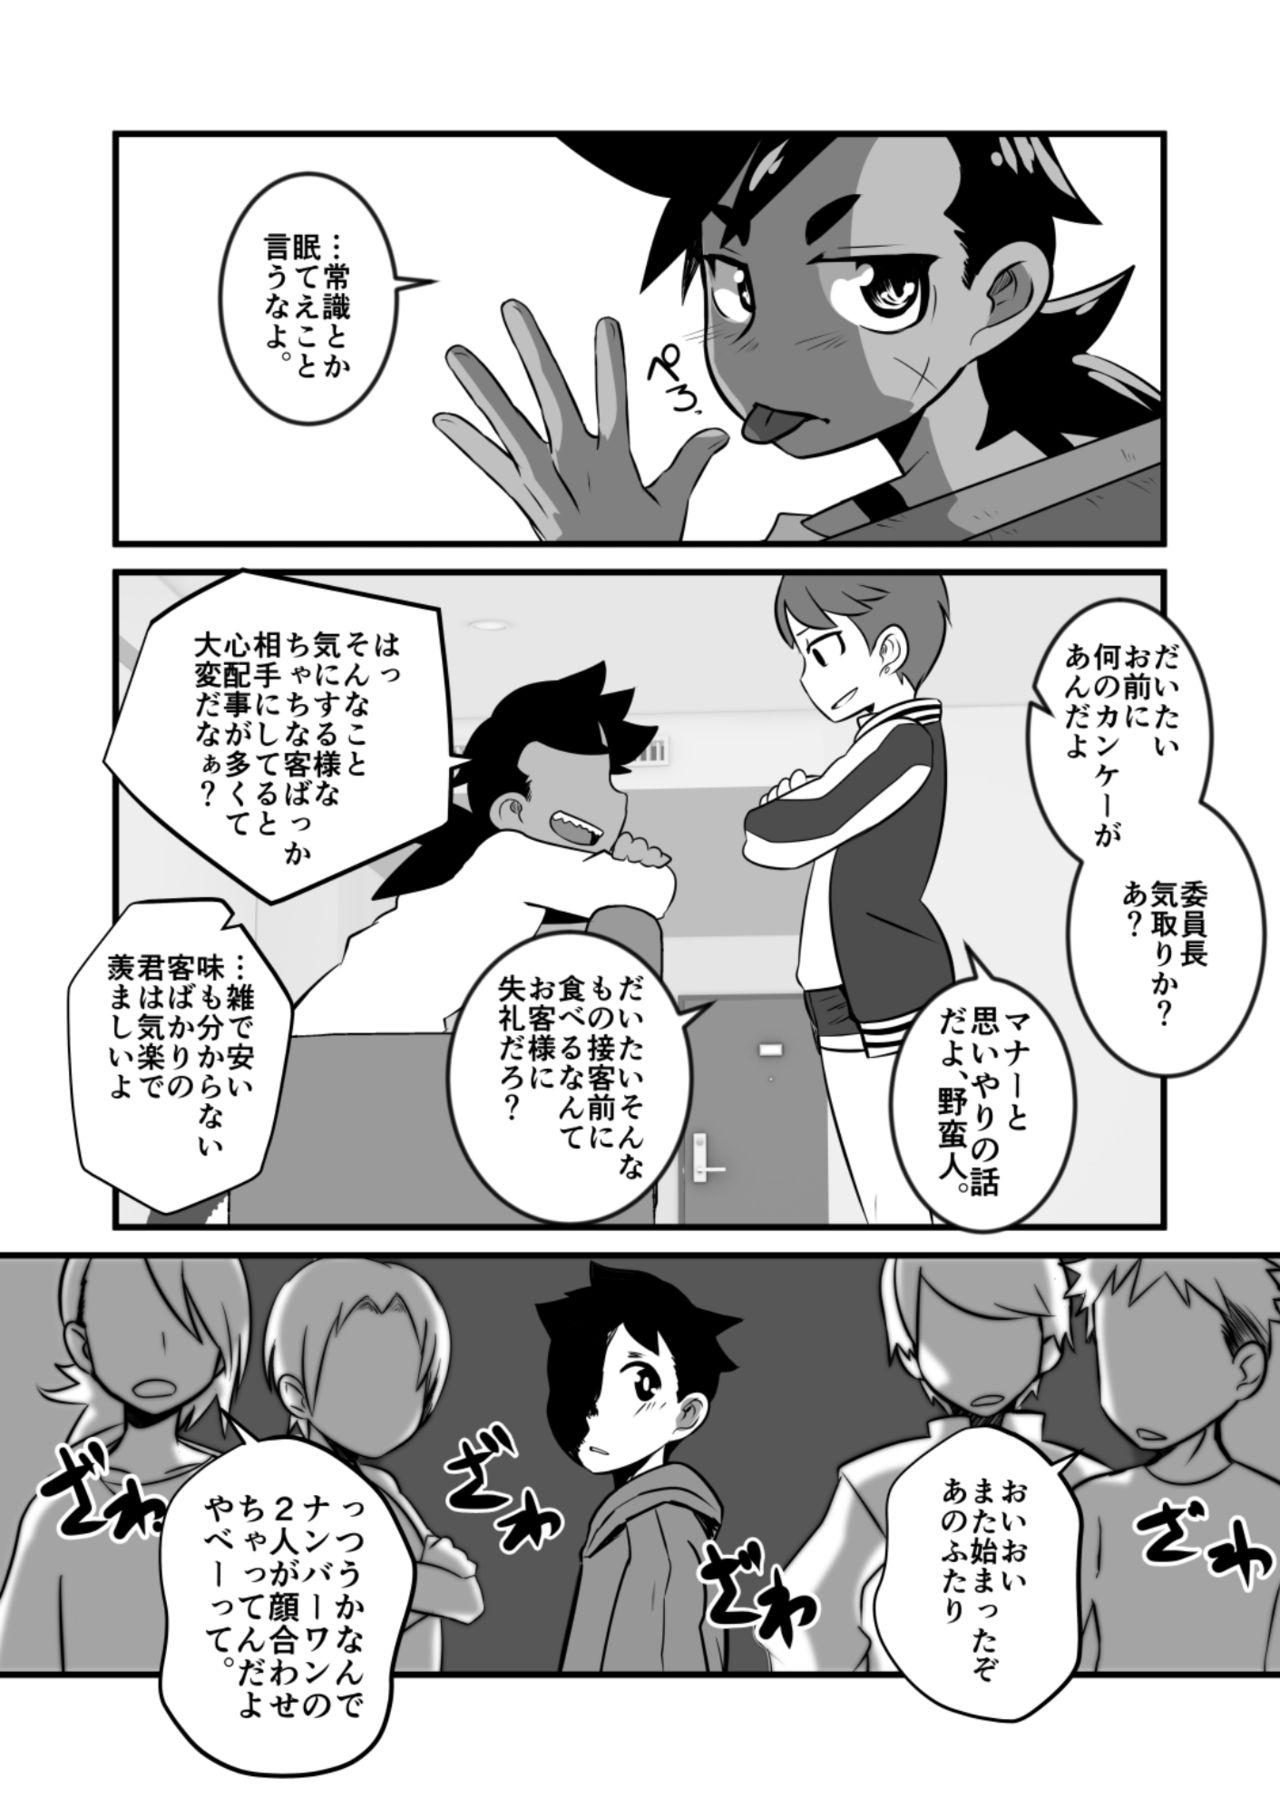 Shōnen manga 10